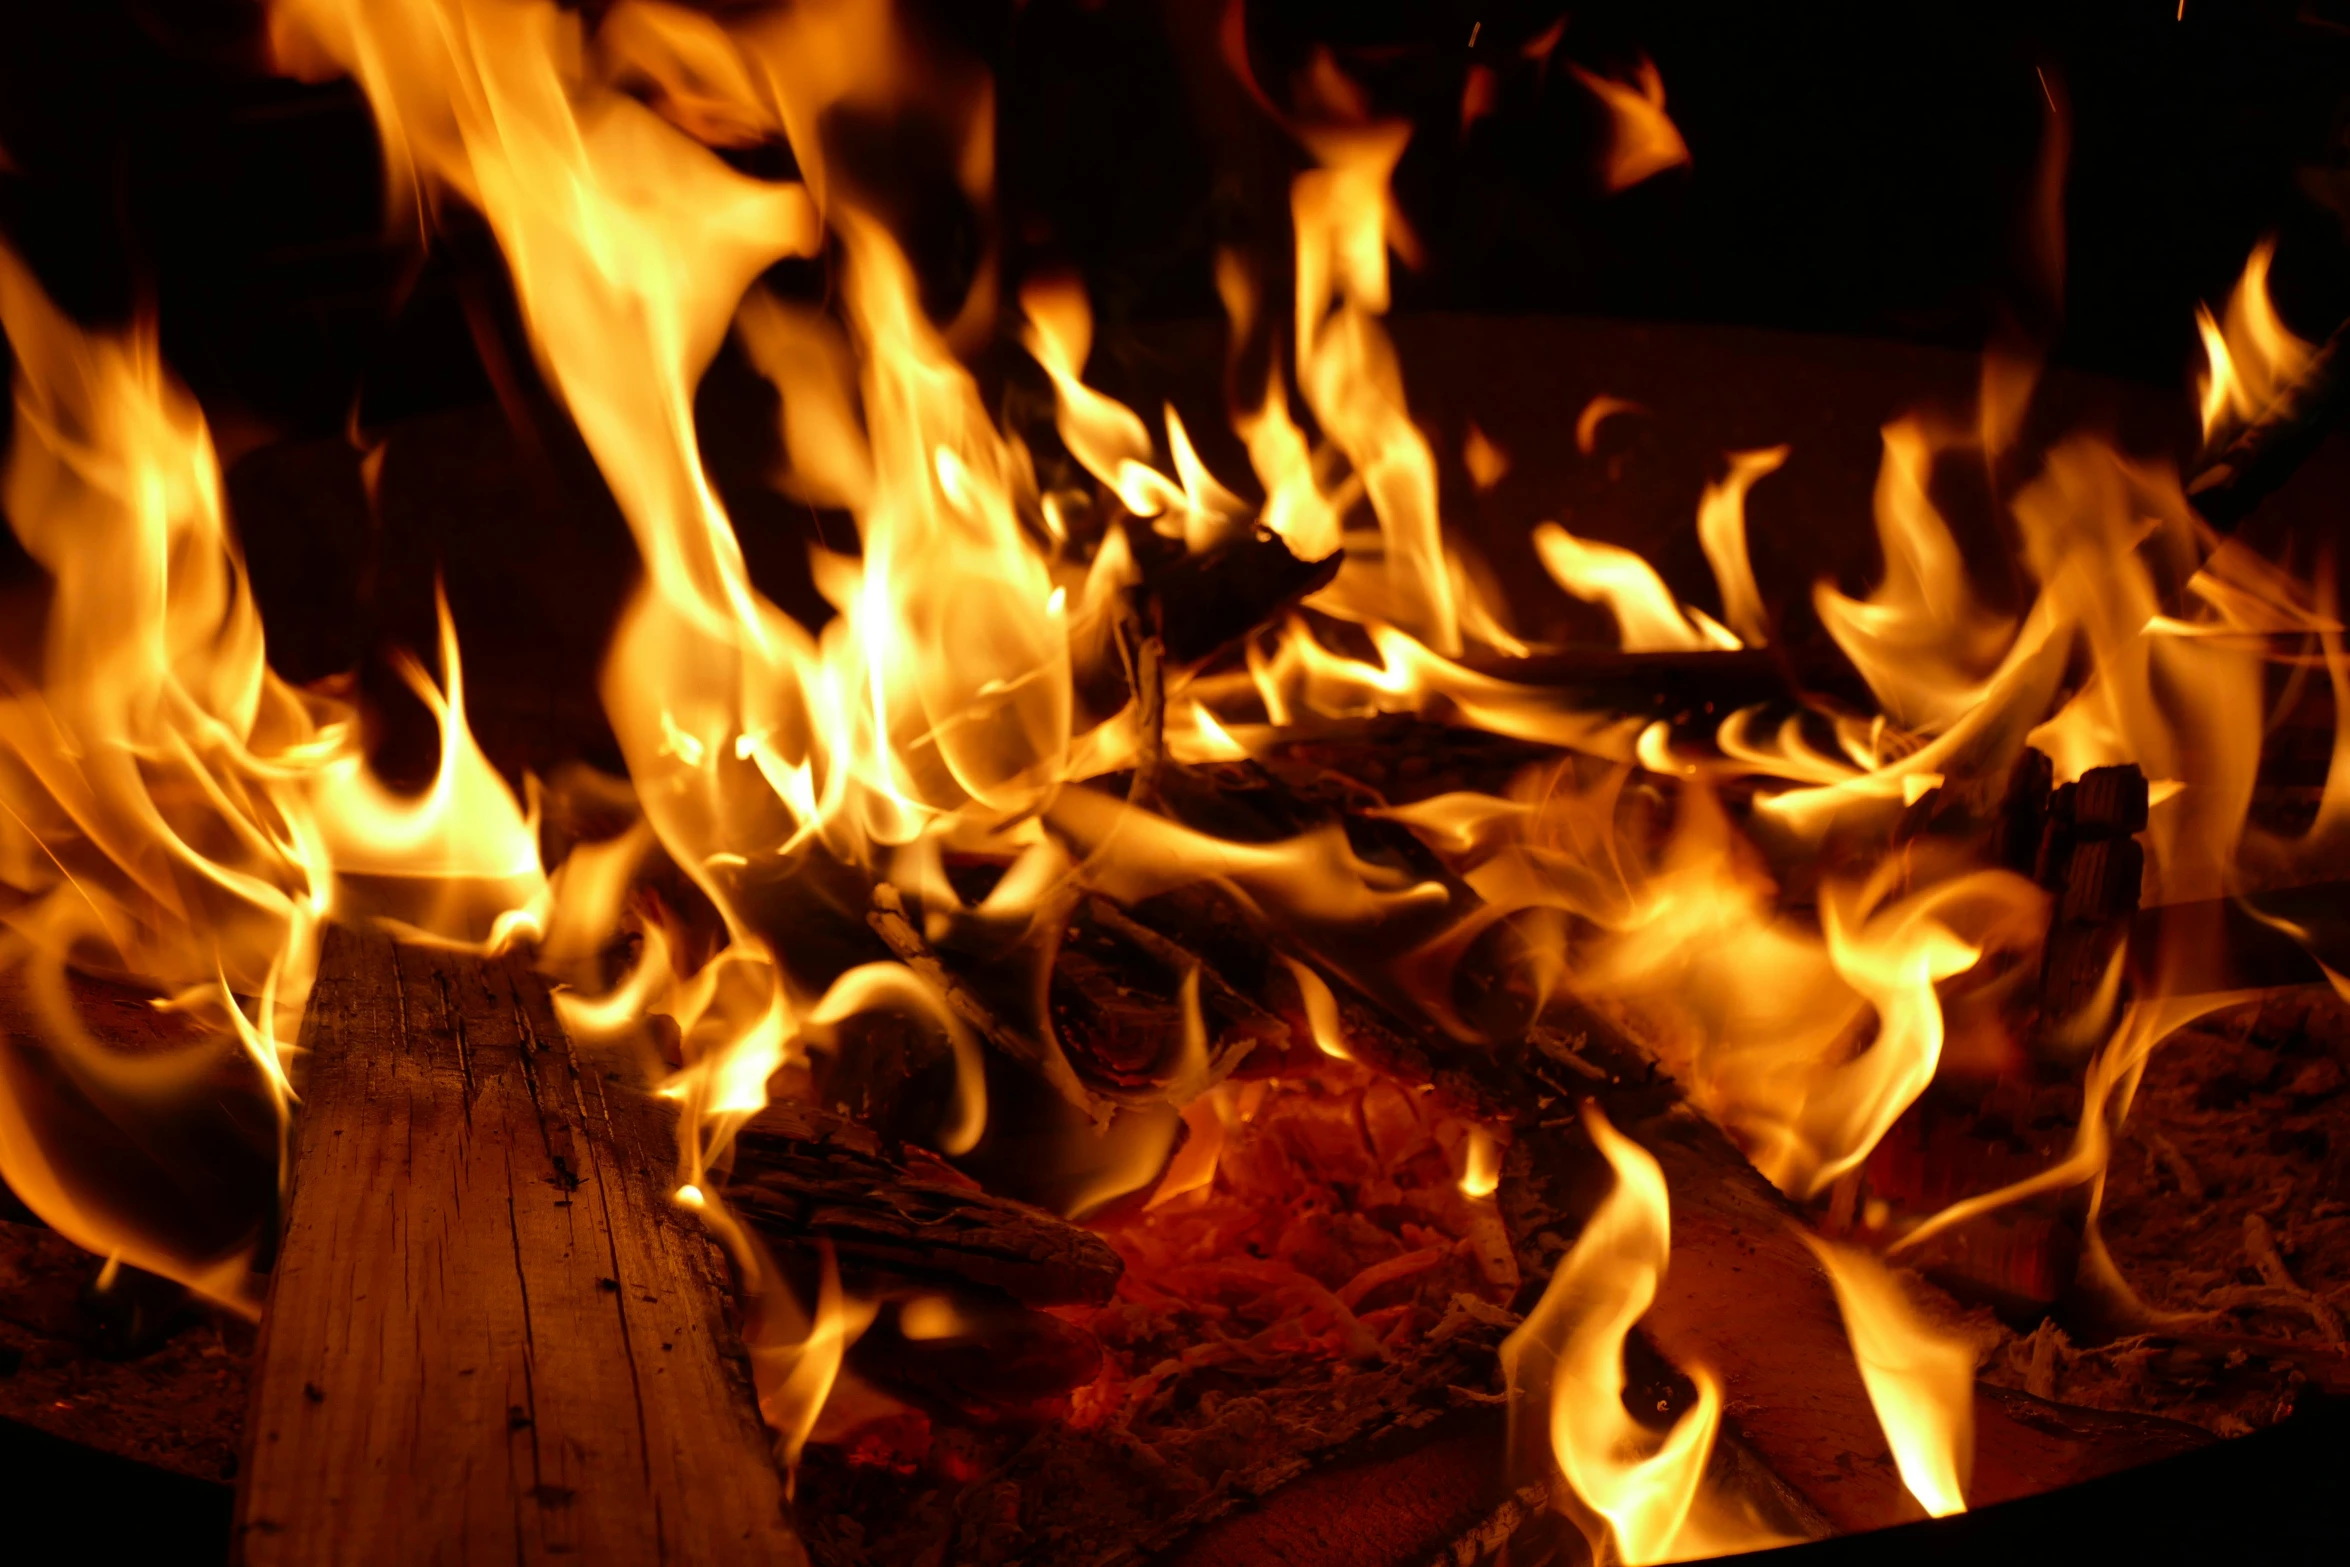 a fire burning through a wooden burning pan